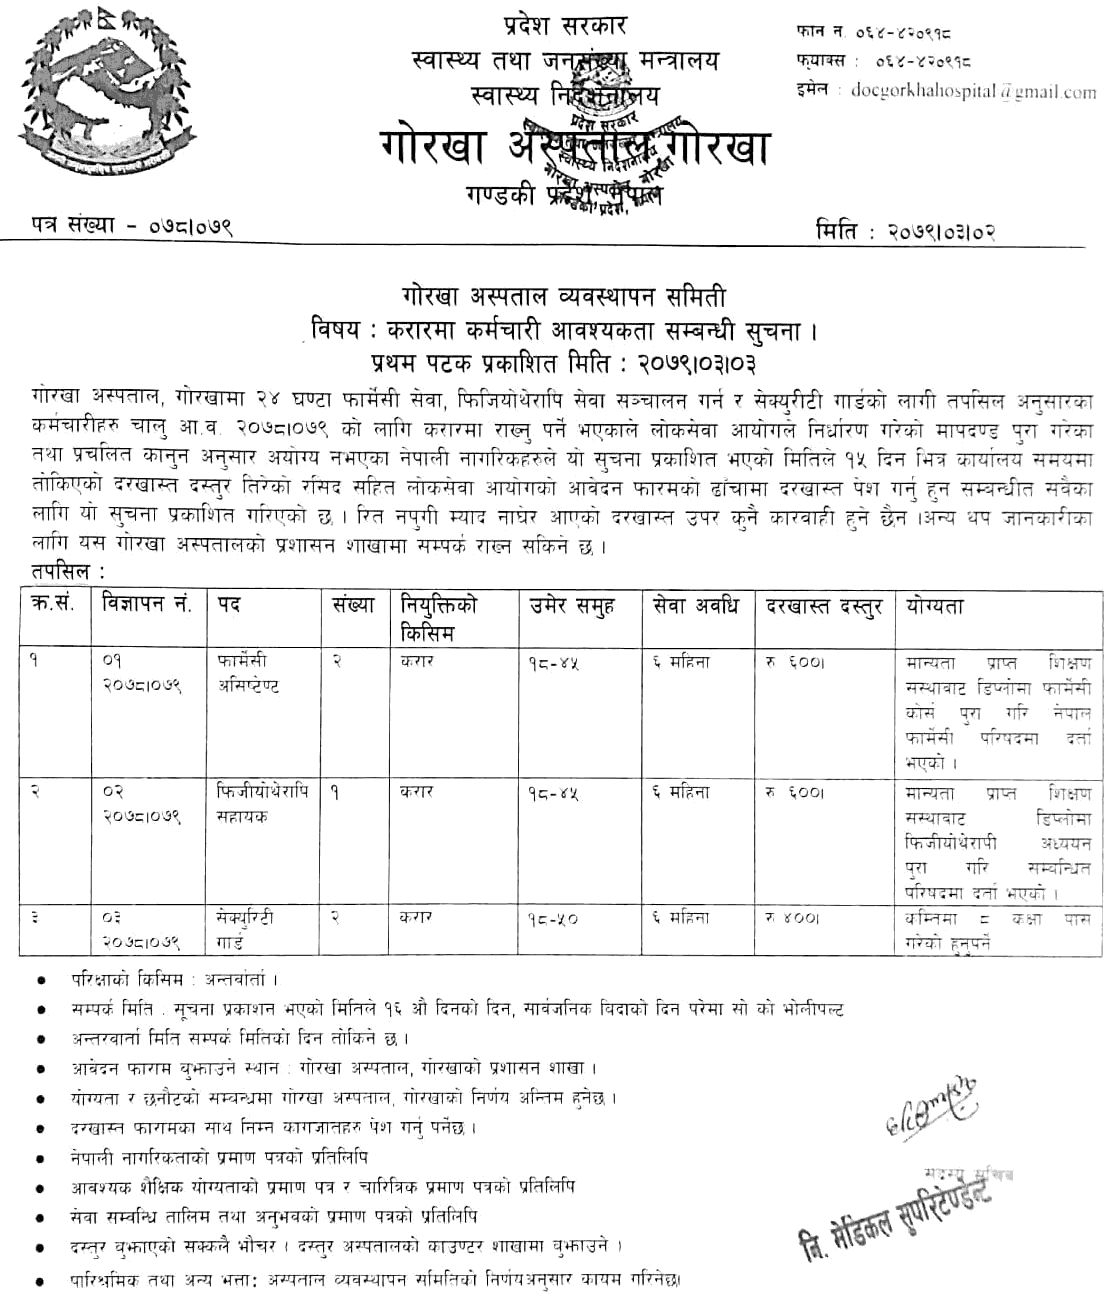 Gorkha Hospital Vacancy for Various Post